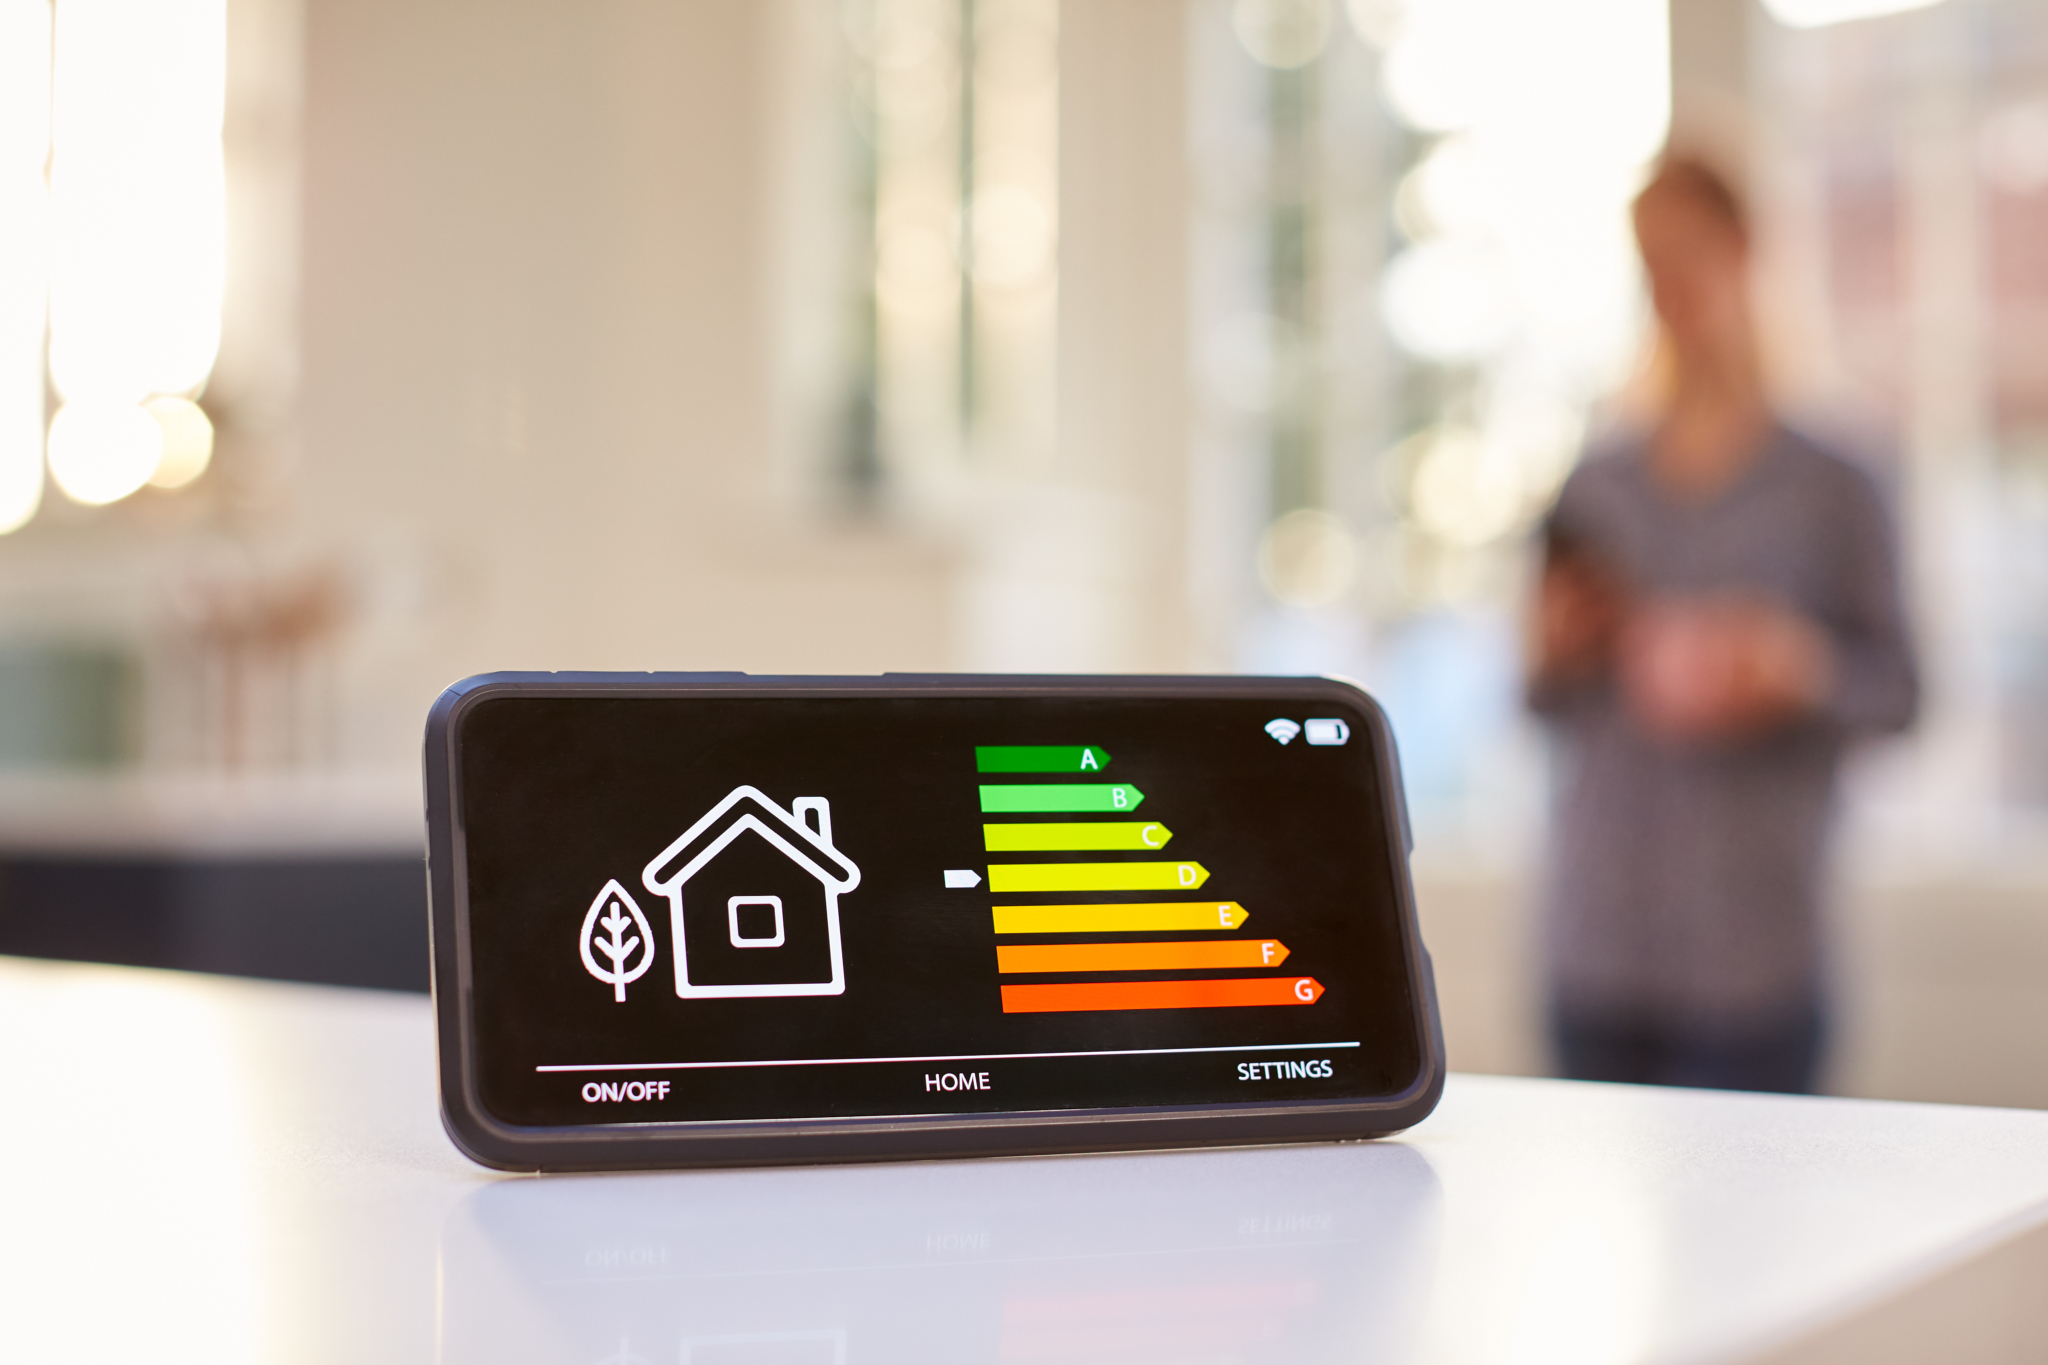 Smart energy meter in kitchen measuring energy efficiency 